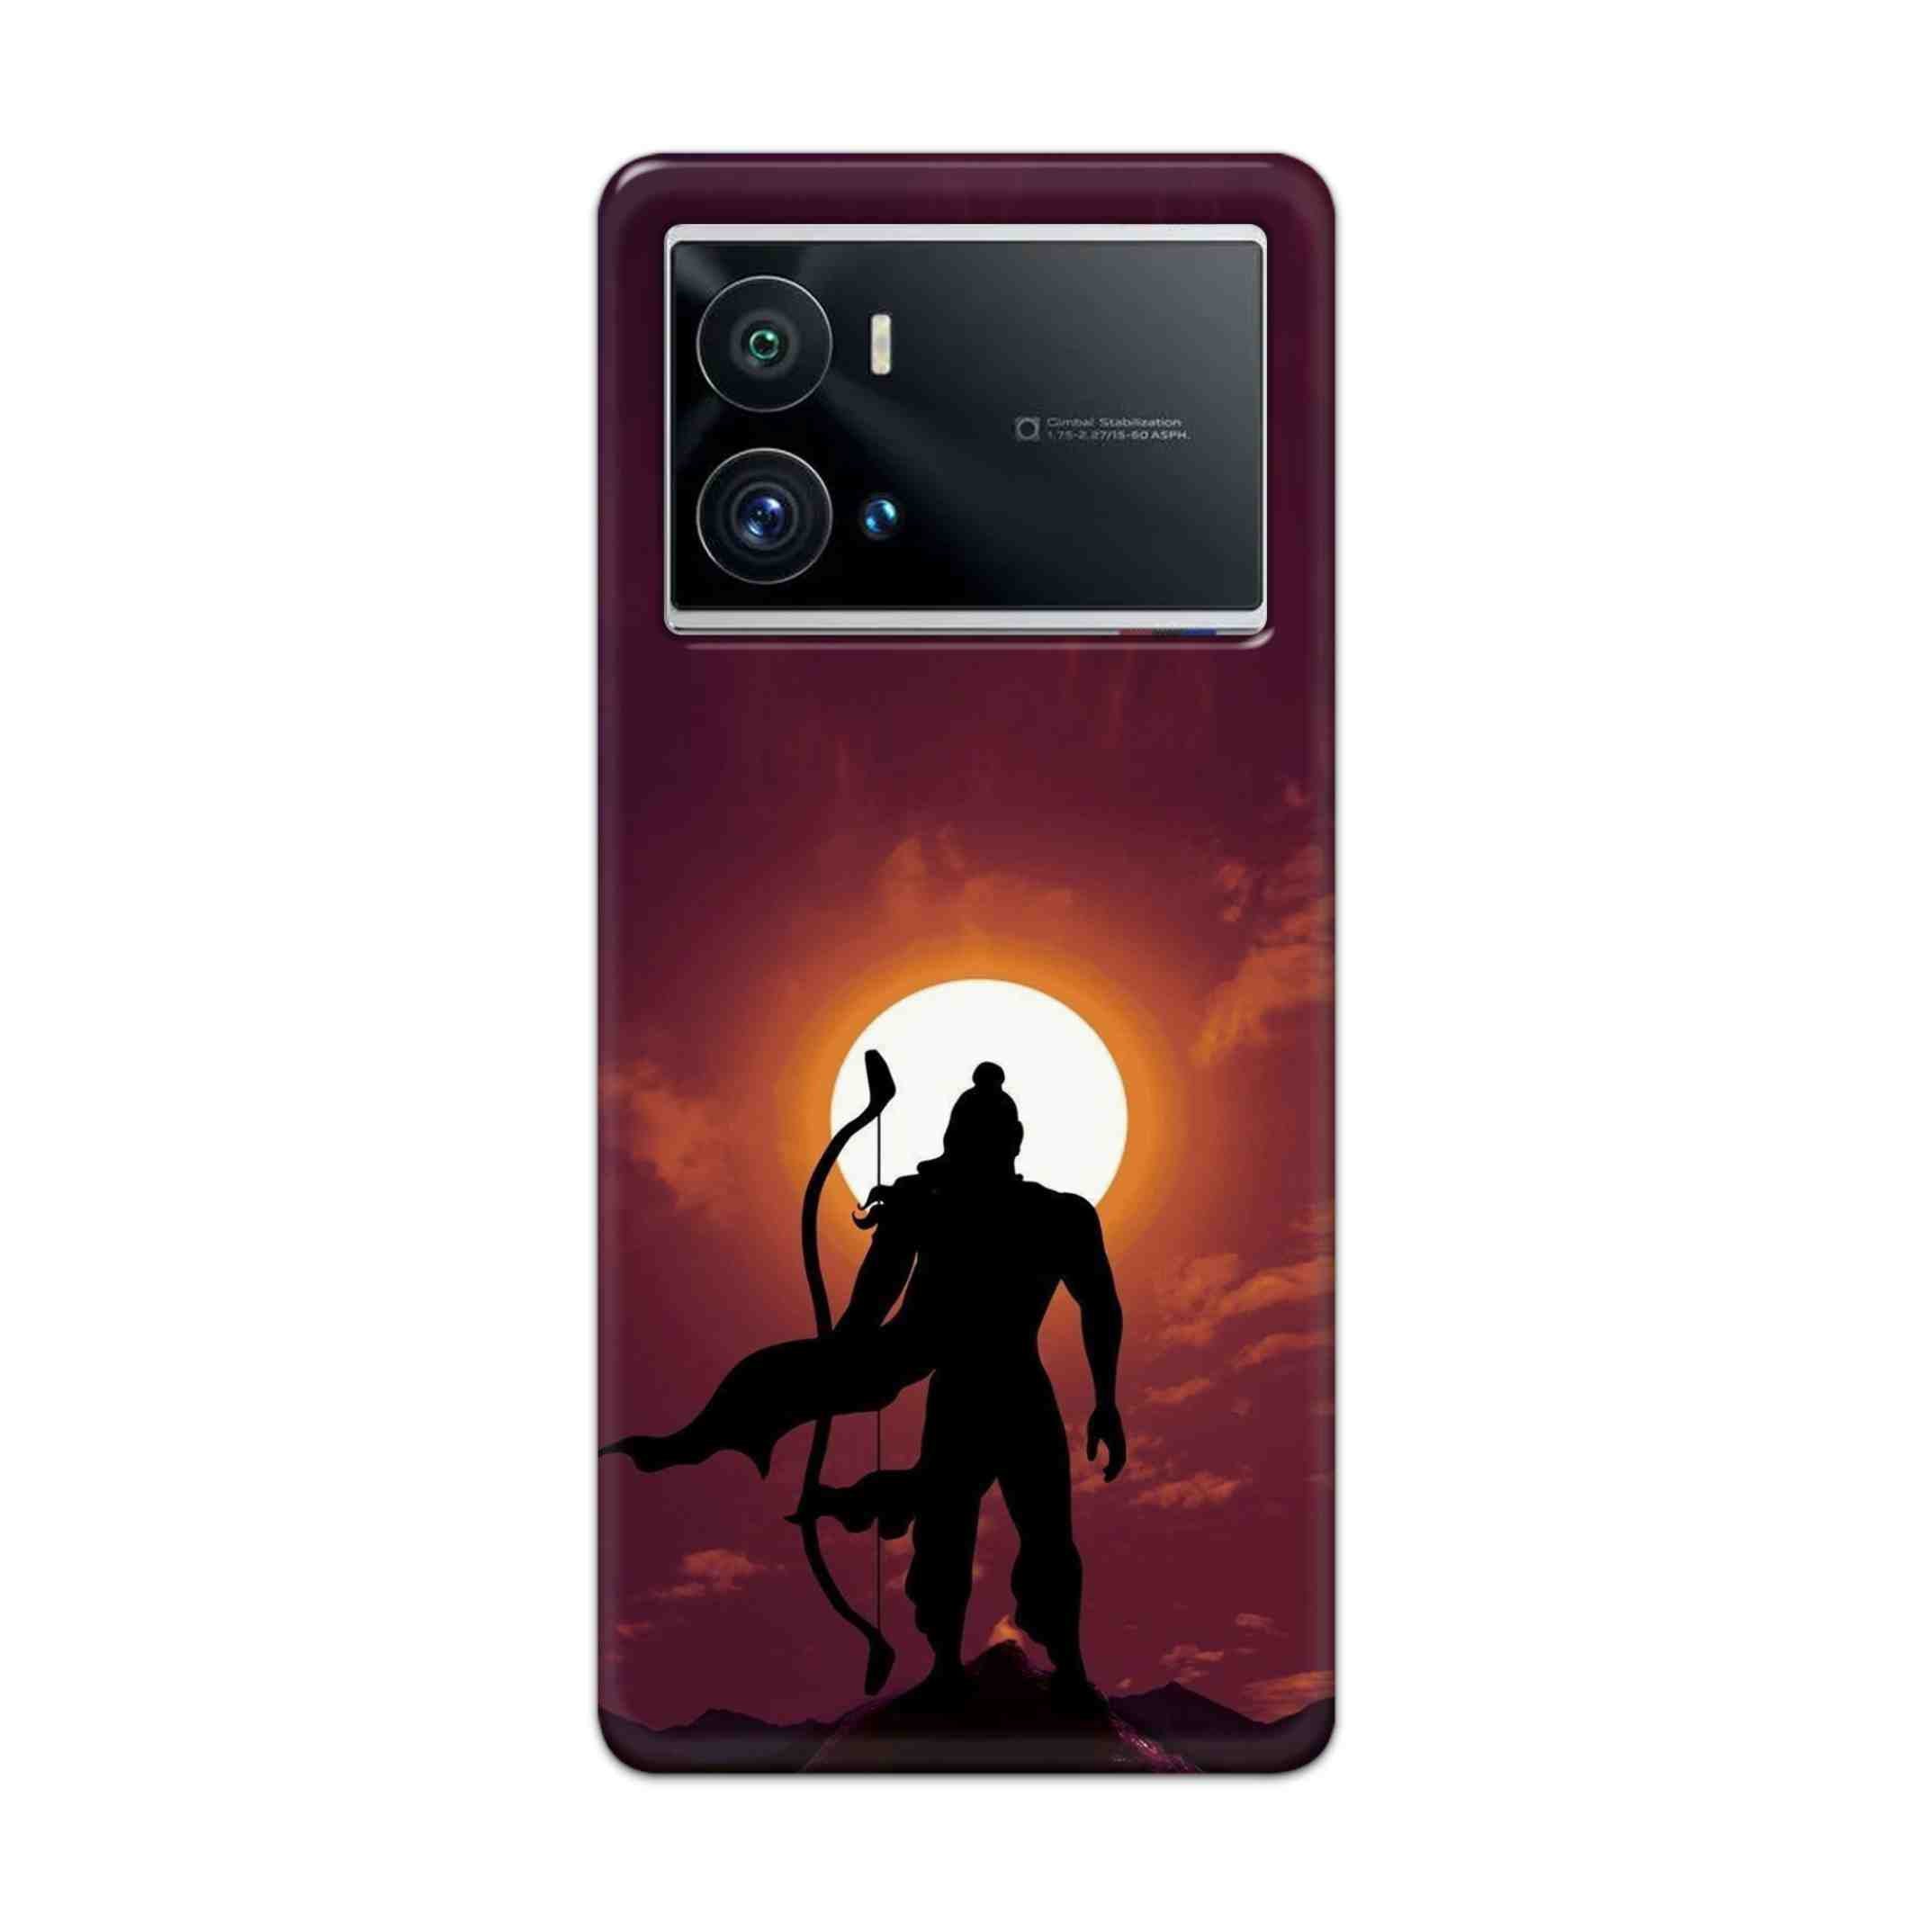 Buy Ram Hard Back Mobile Phone Case Cover For iQOO 9 Pro 5G Online